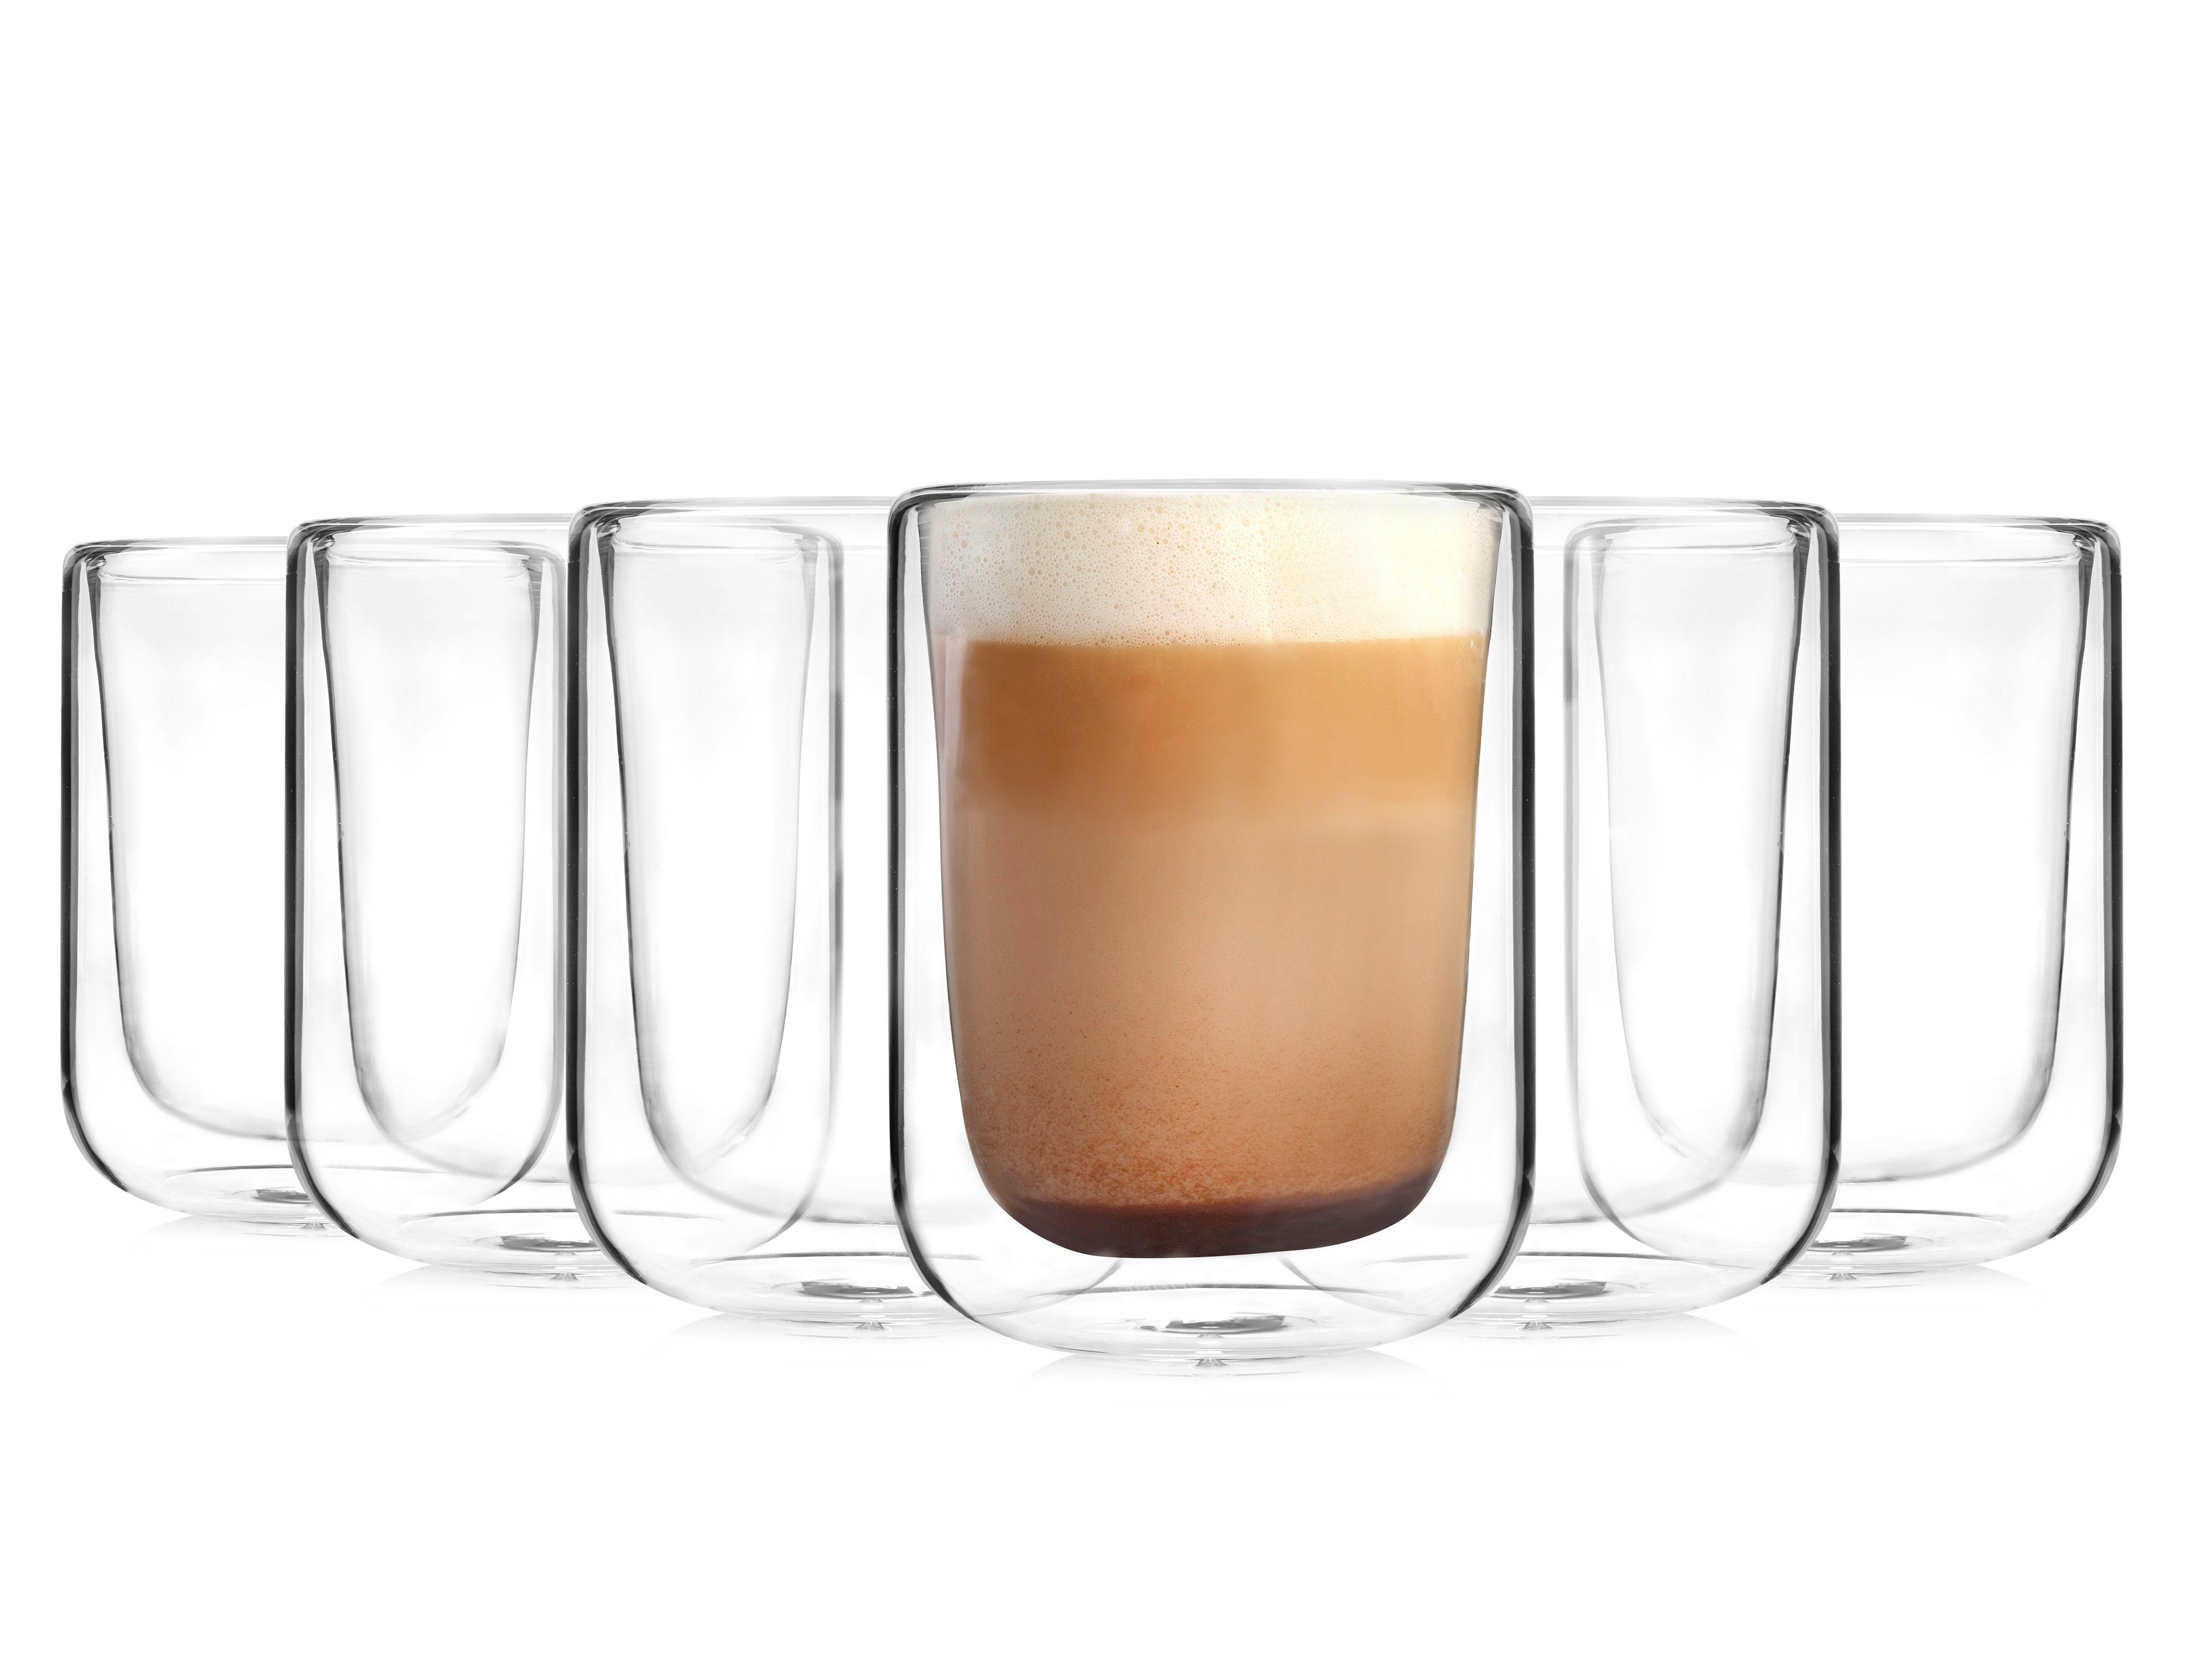 SÄNGER Thermoglas Cappuccino Склоset doppelwandig, Glas, 330 ml, spülmaschinengeeignet